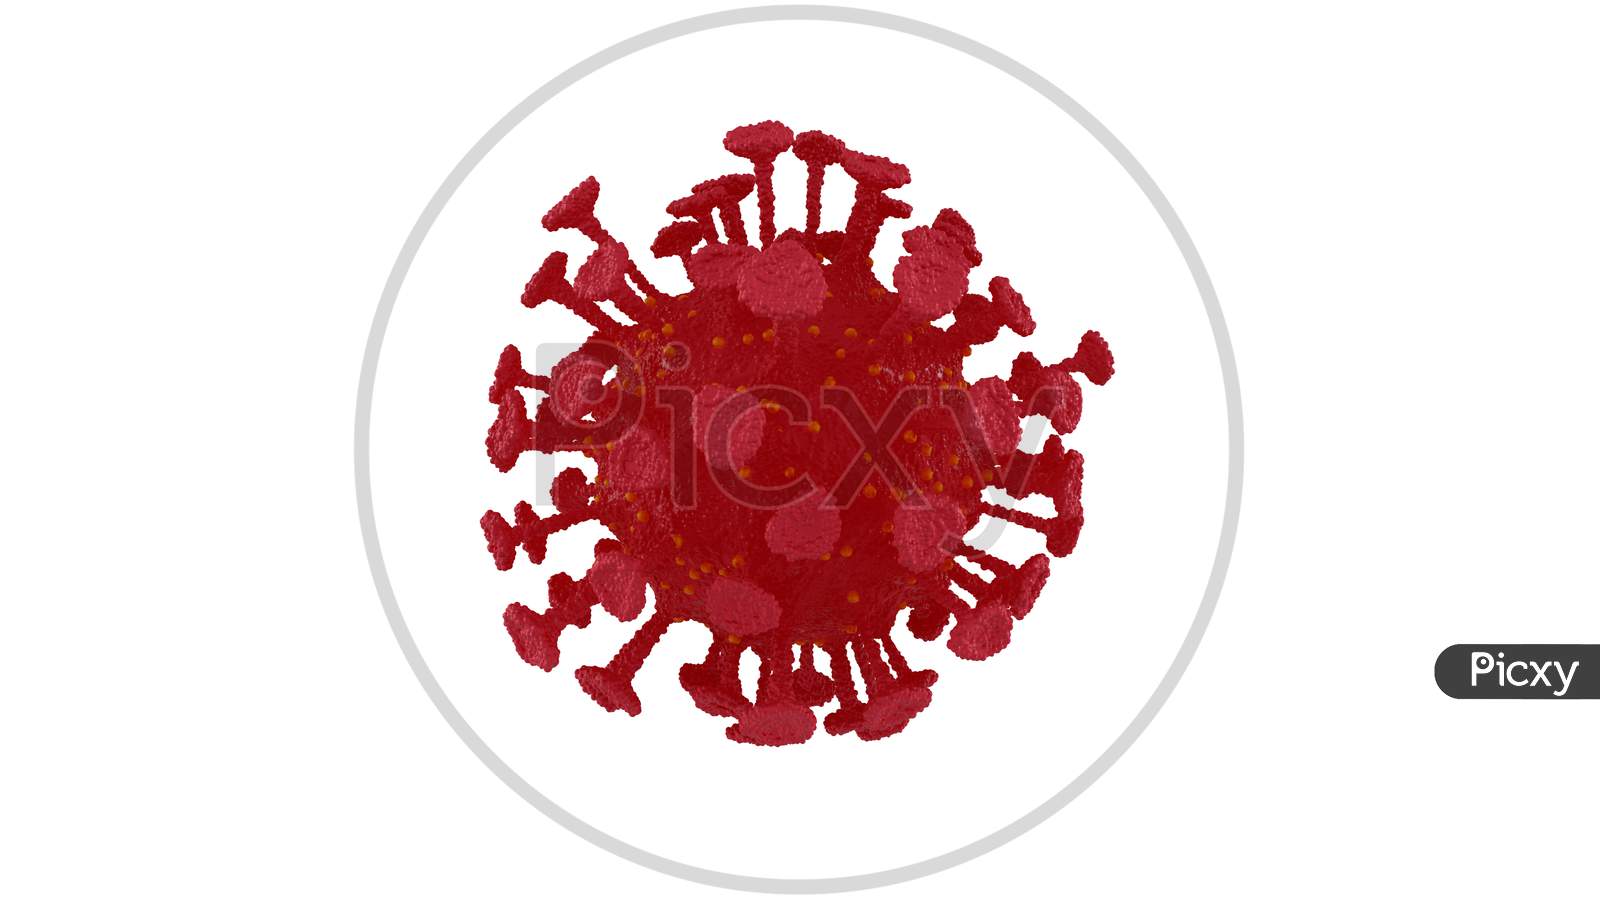 Coronavirus 2019-Ncov Novel Coronavirus Concept Resposible For Asian Flu Outbreak And Coronaviruses Influenza As Dangerous Flu Strain Cases As A Pandemic. Microscope Virus Close Up. 3D Render